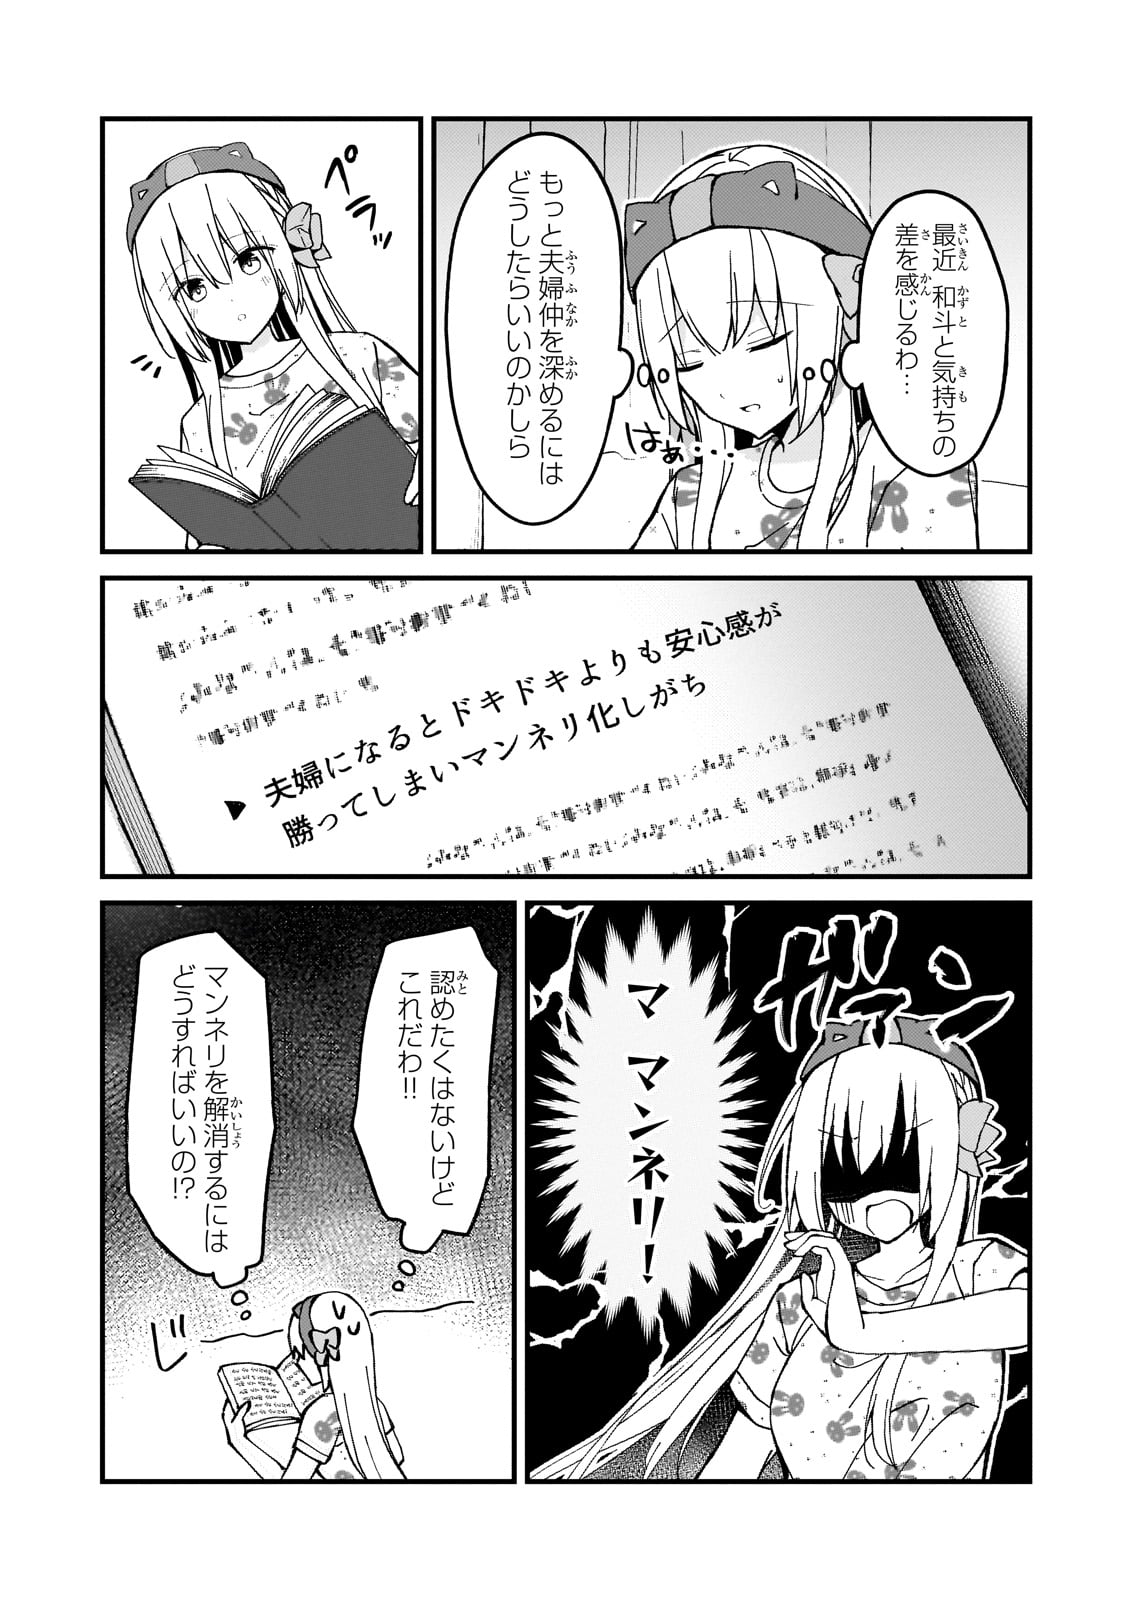 Netoge no Yome ga Ninki Idol datta - Chapter 16 - Page 3